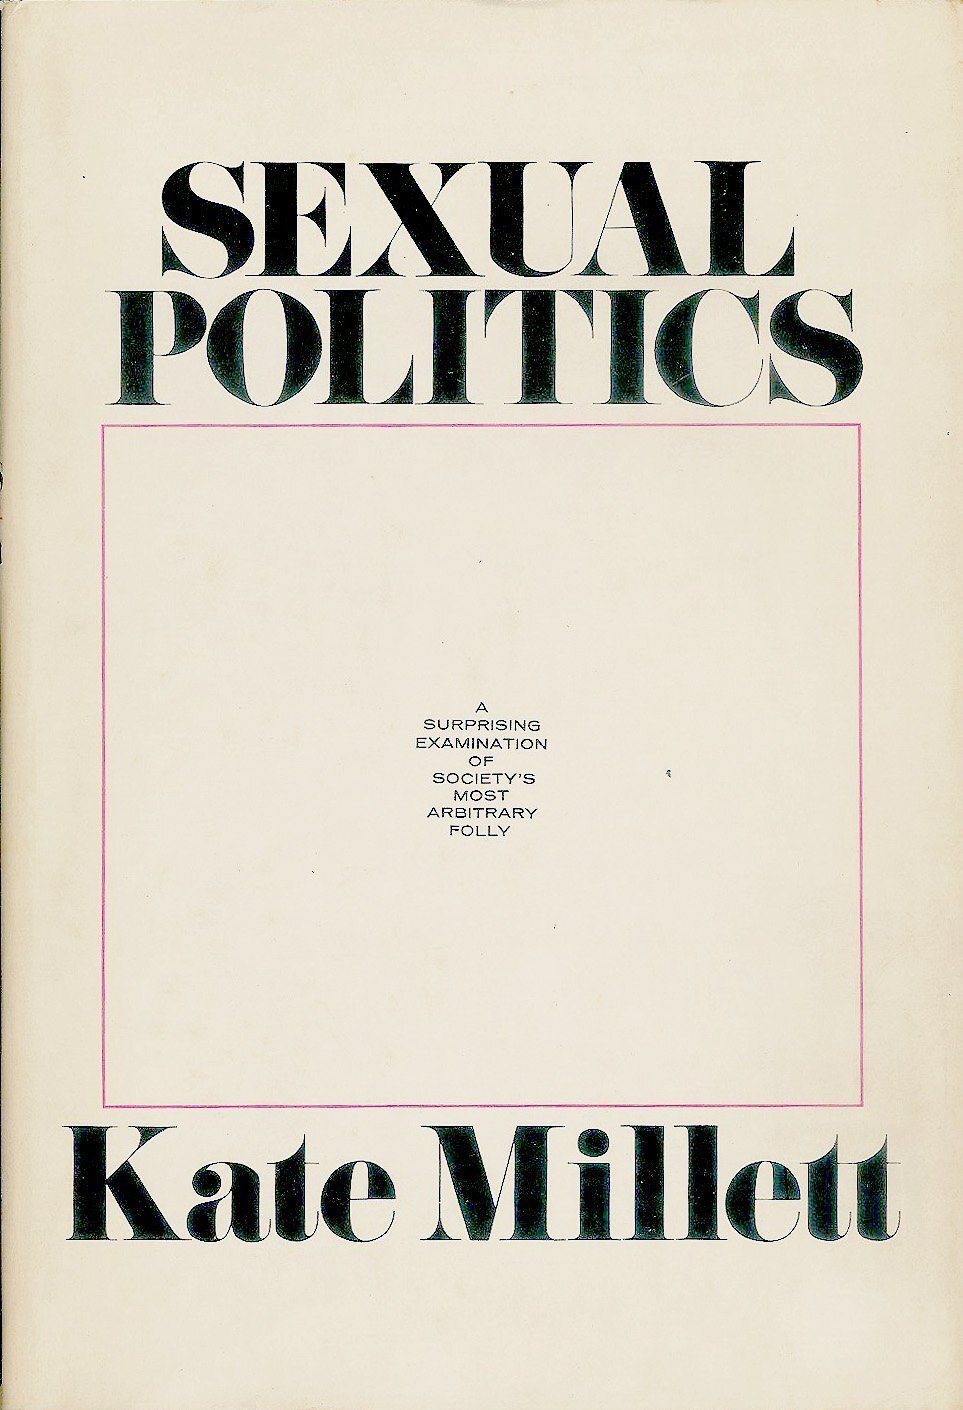 Sexual Politics by Kate Millett.jpg